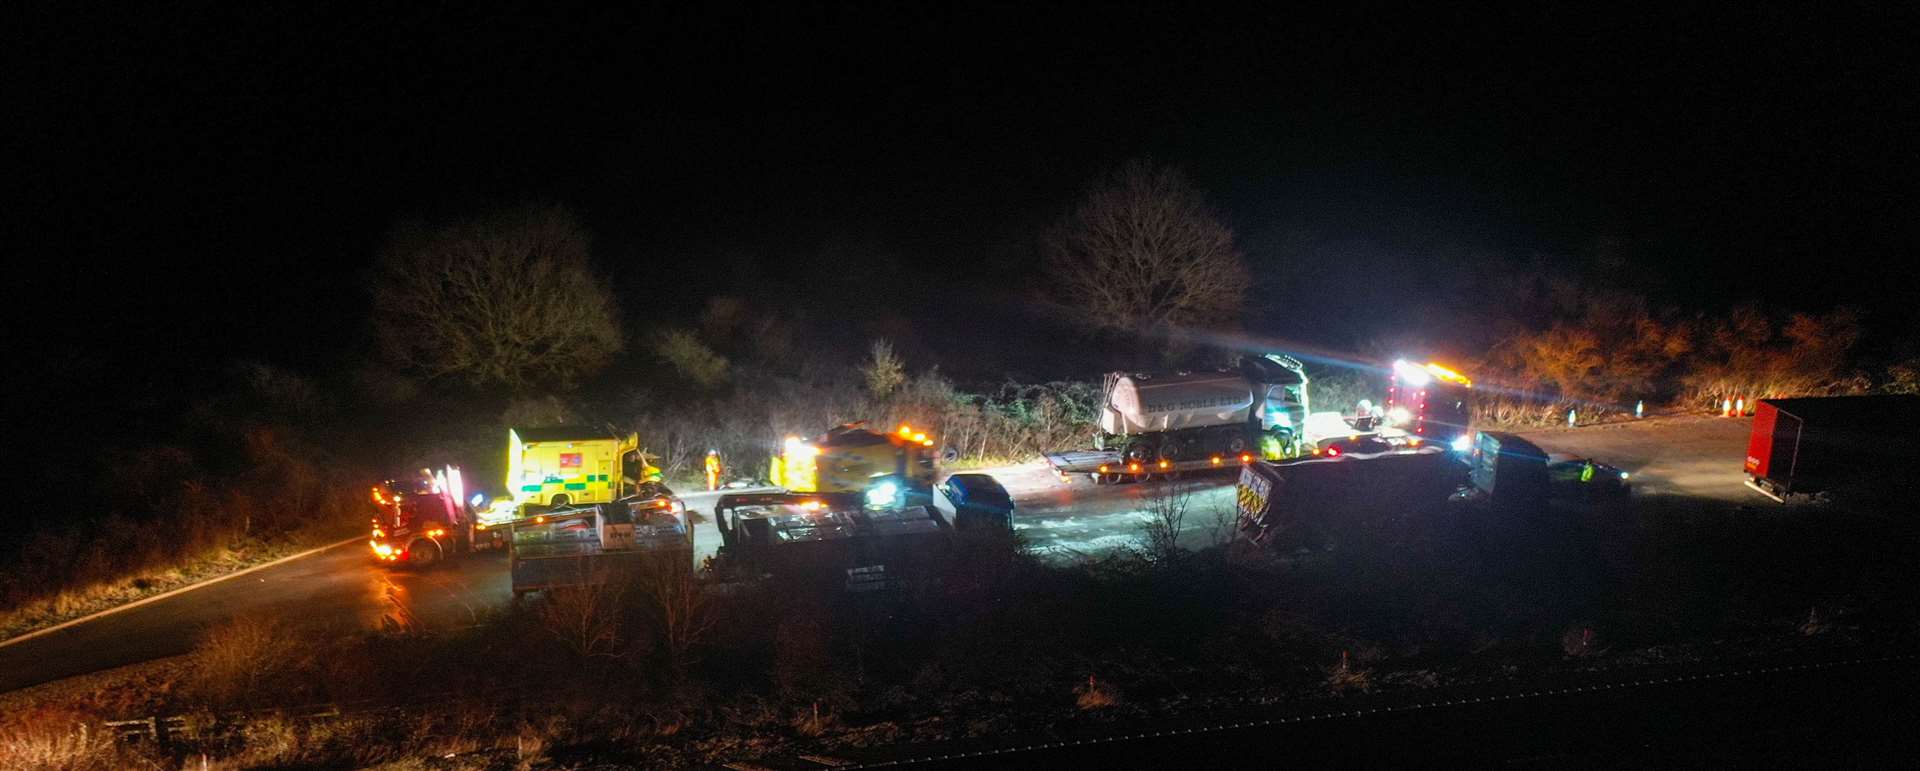 The crash happened on the A21 near Tonbridge. Picture: UKNIP